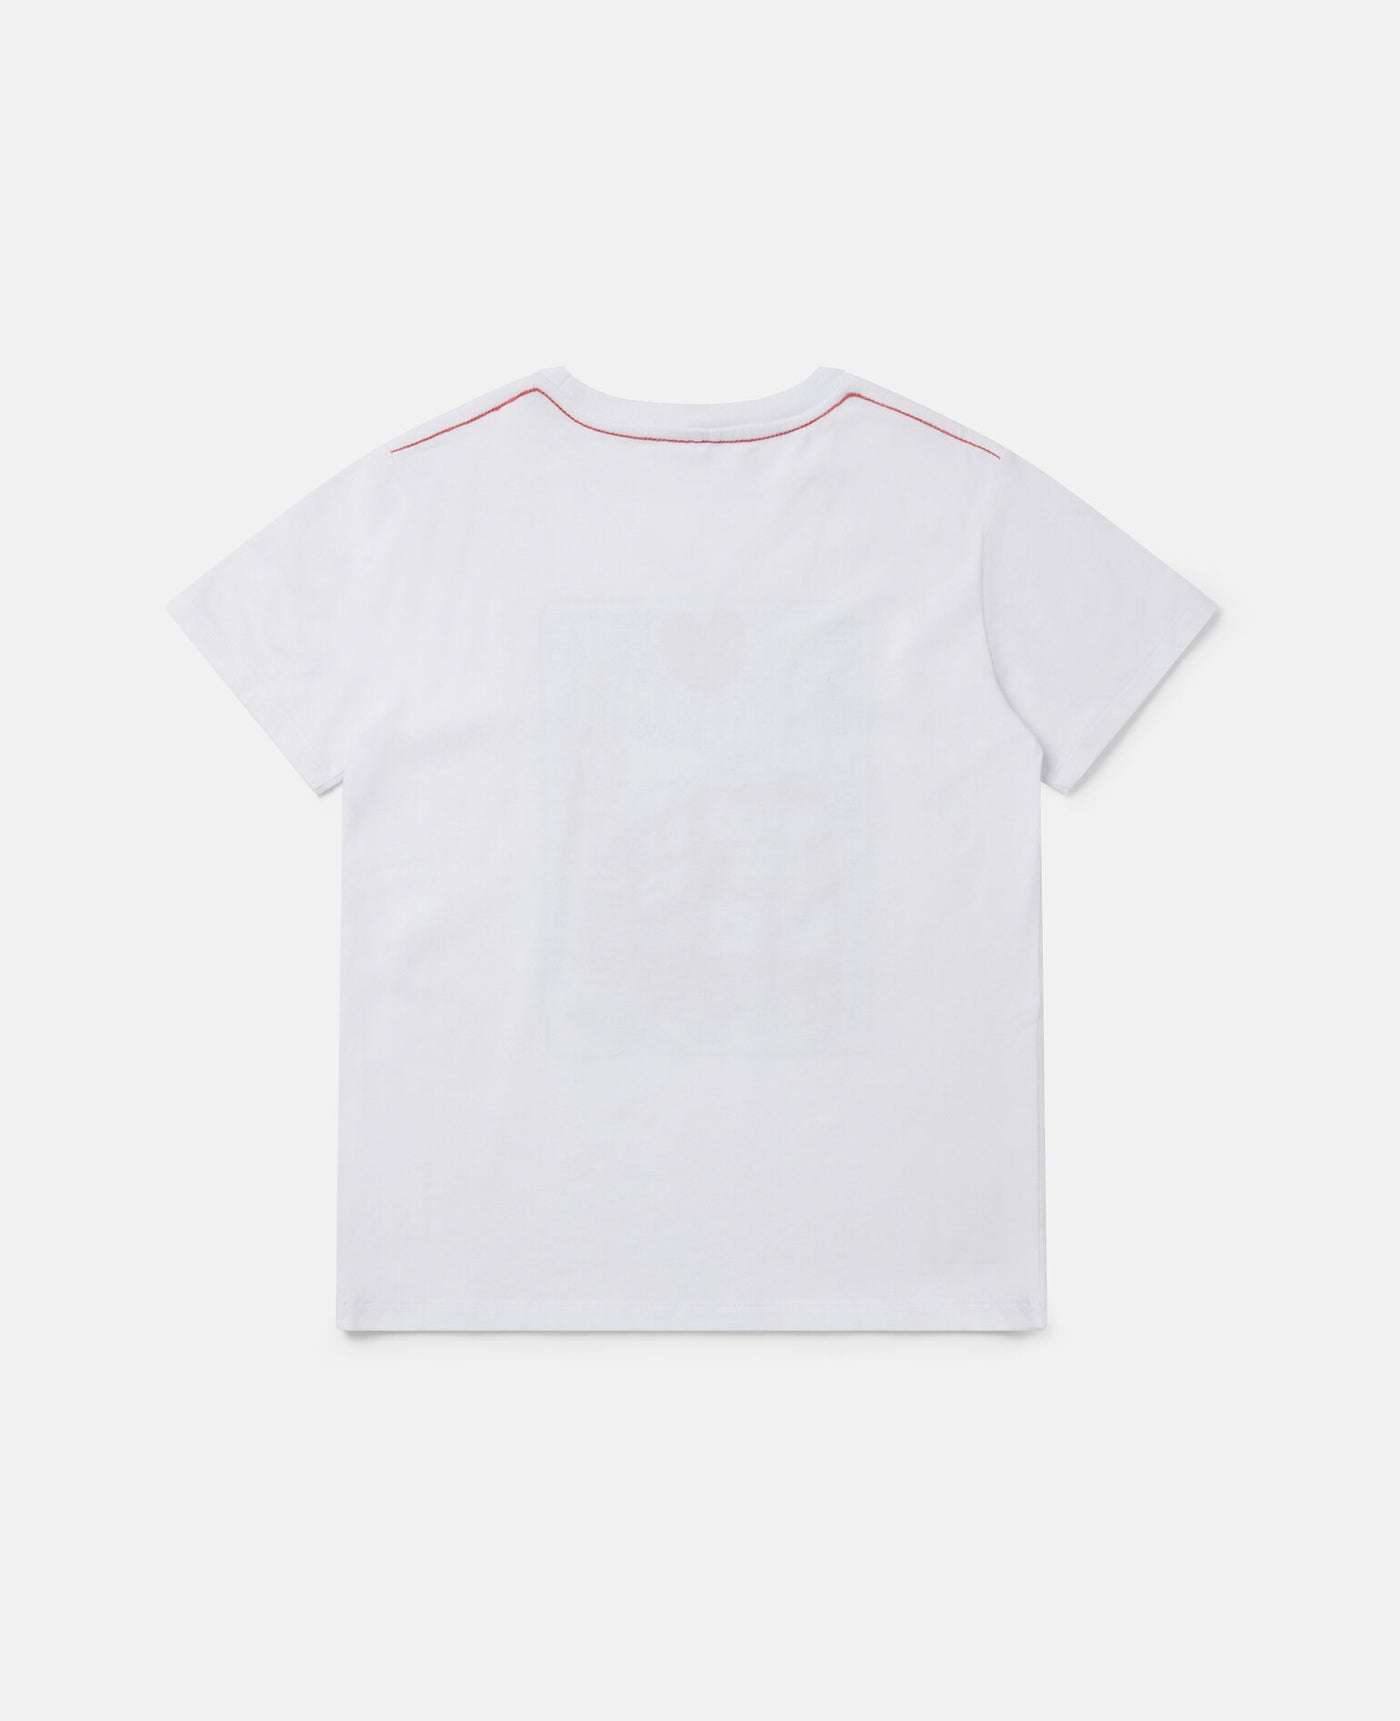 Girls London Print White Graphic T-Shirt